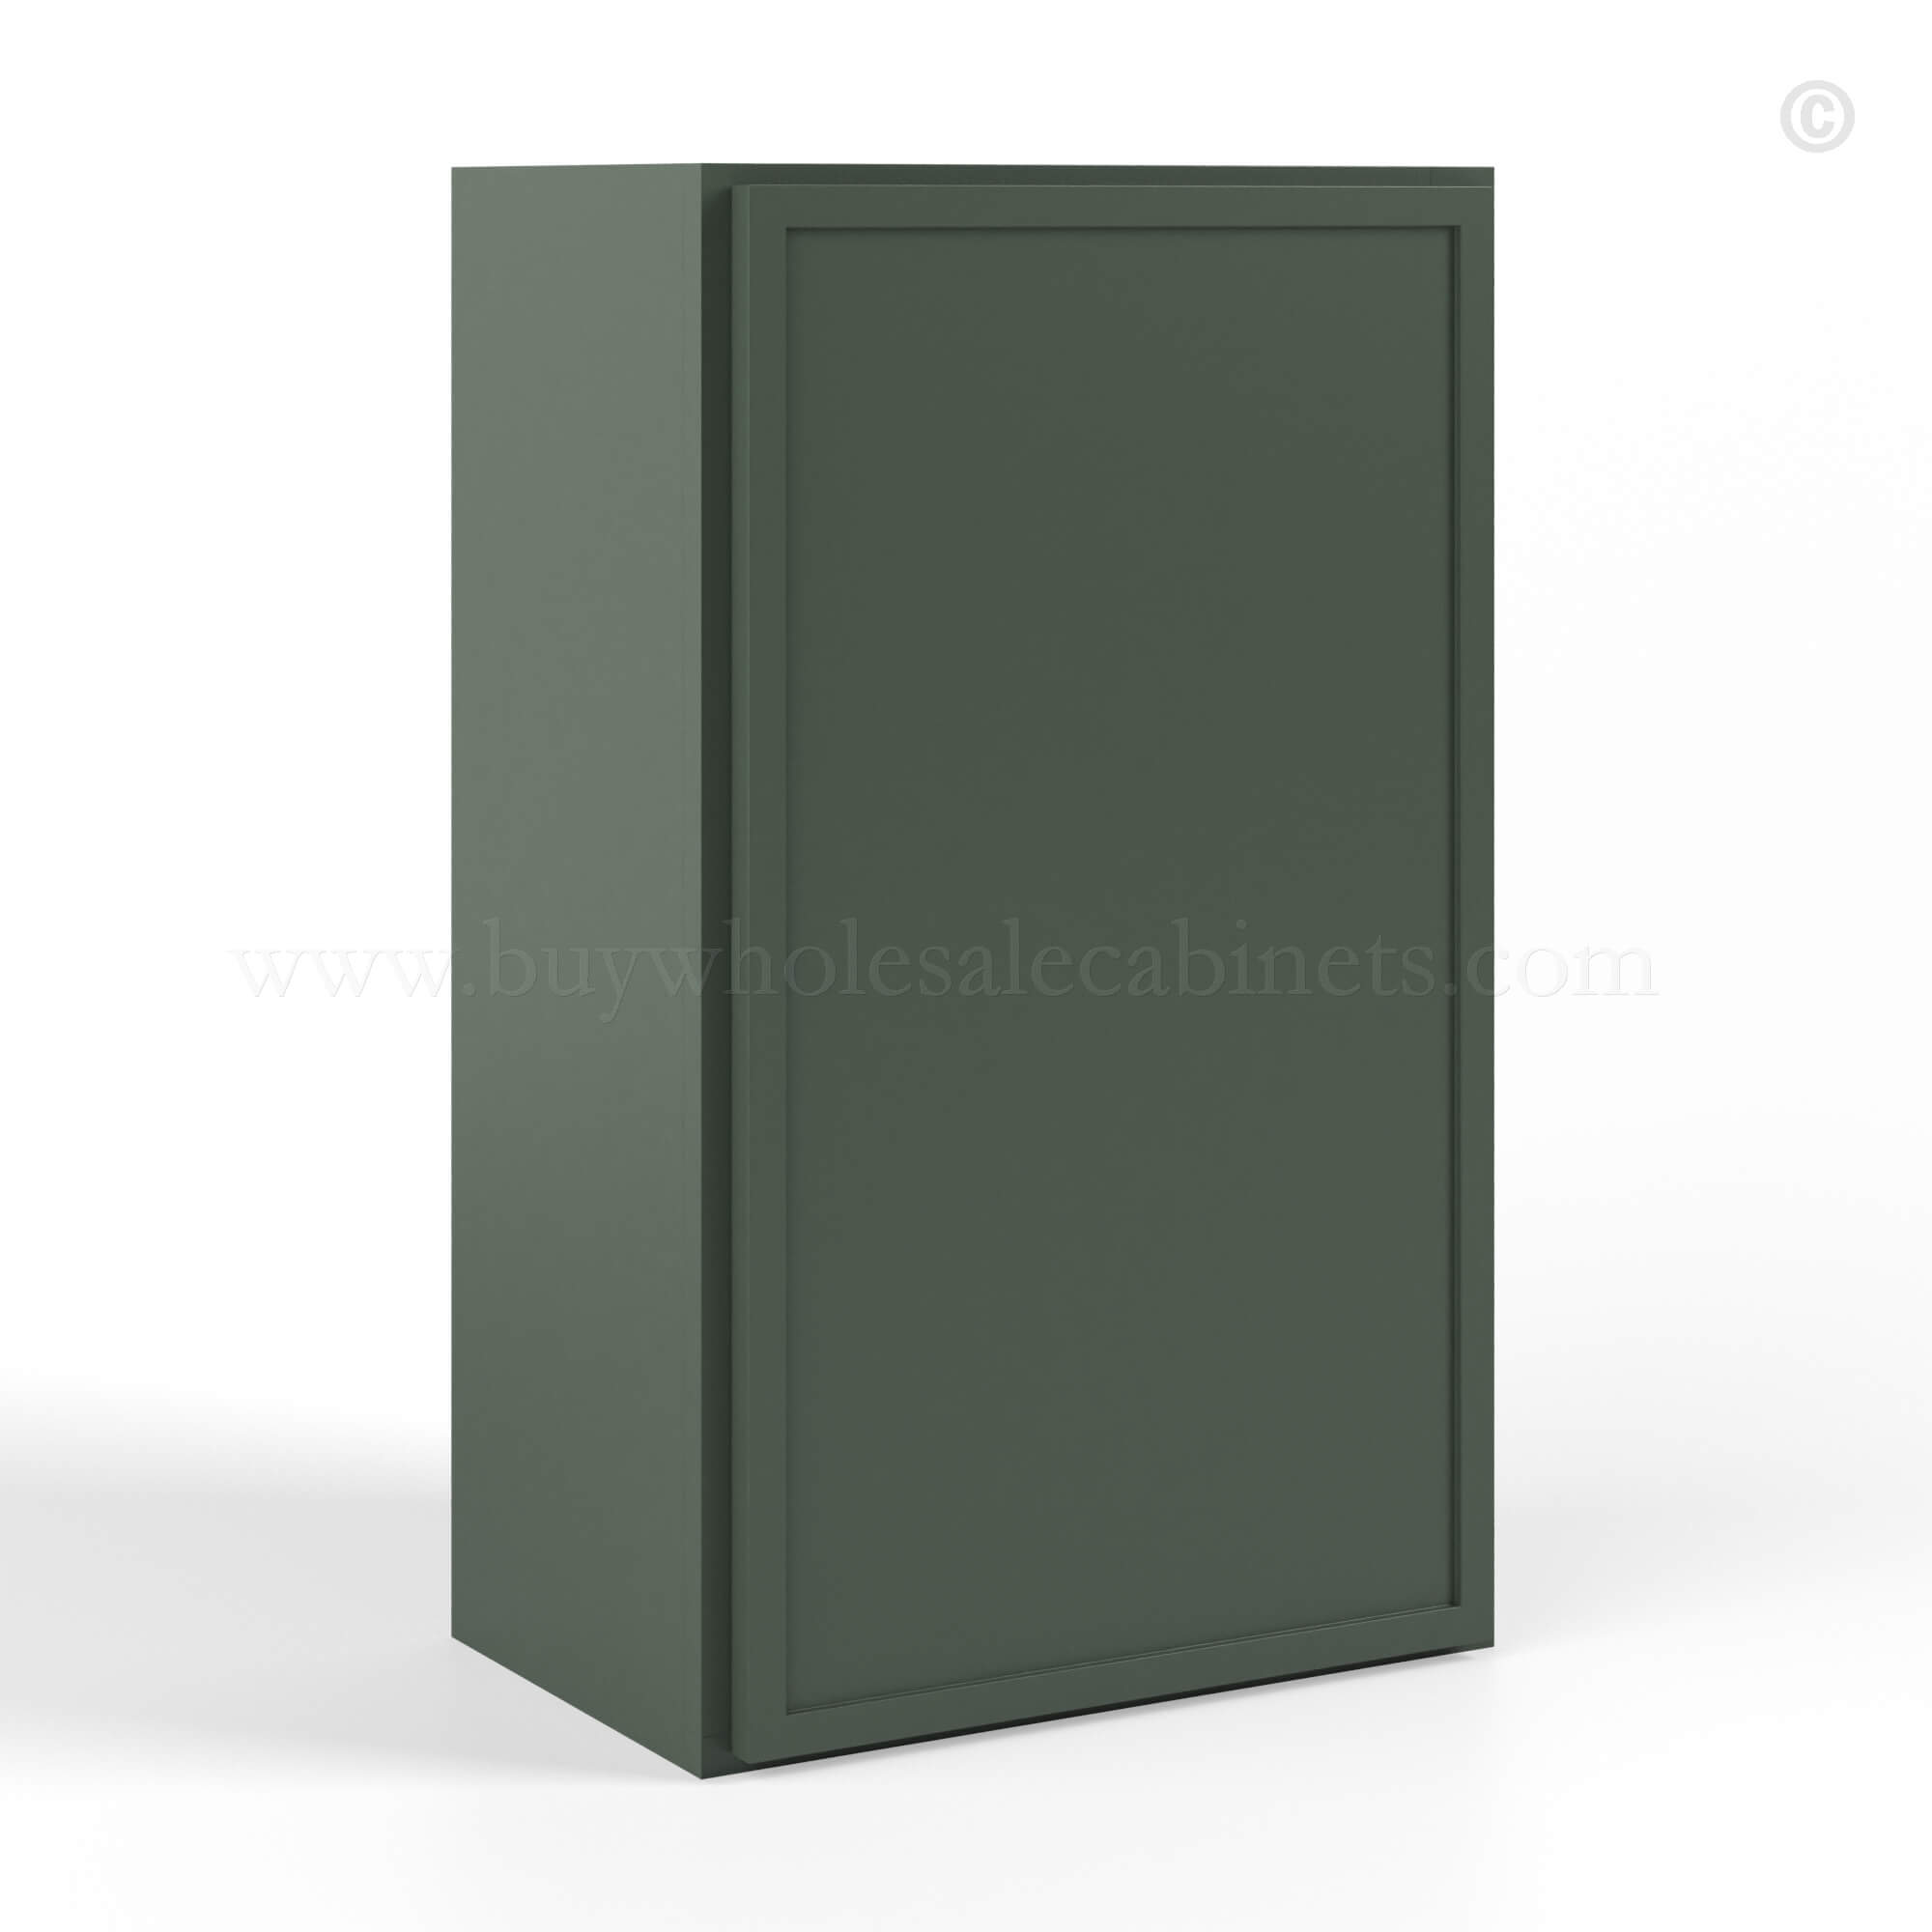 Slim Shaker Green Single Door Wall Cabinet 30″H, rta cabinets, wholesale cabinets